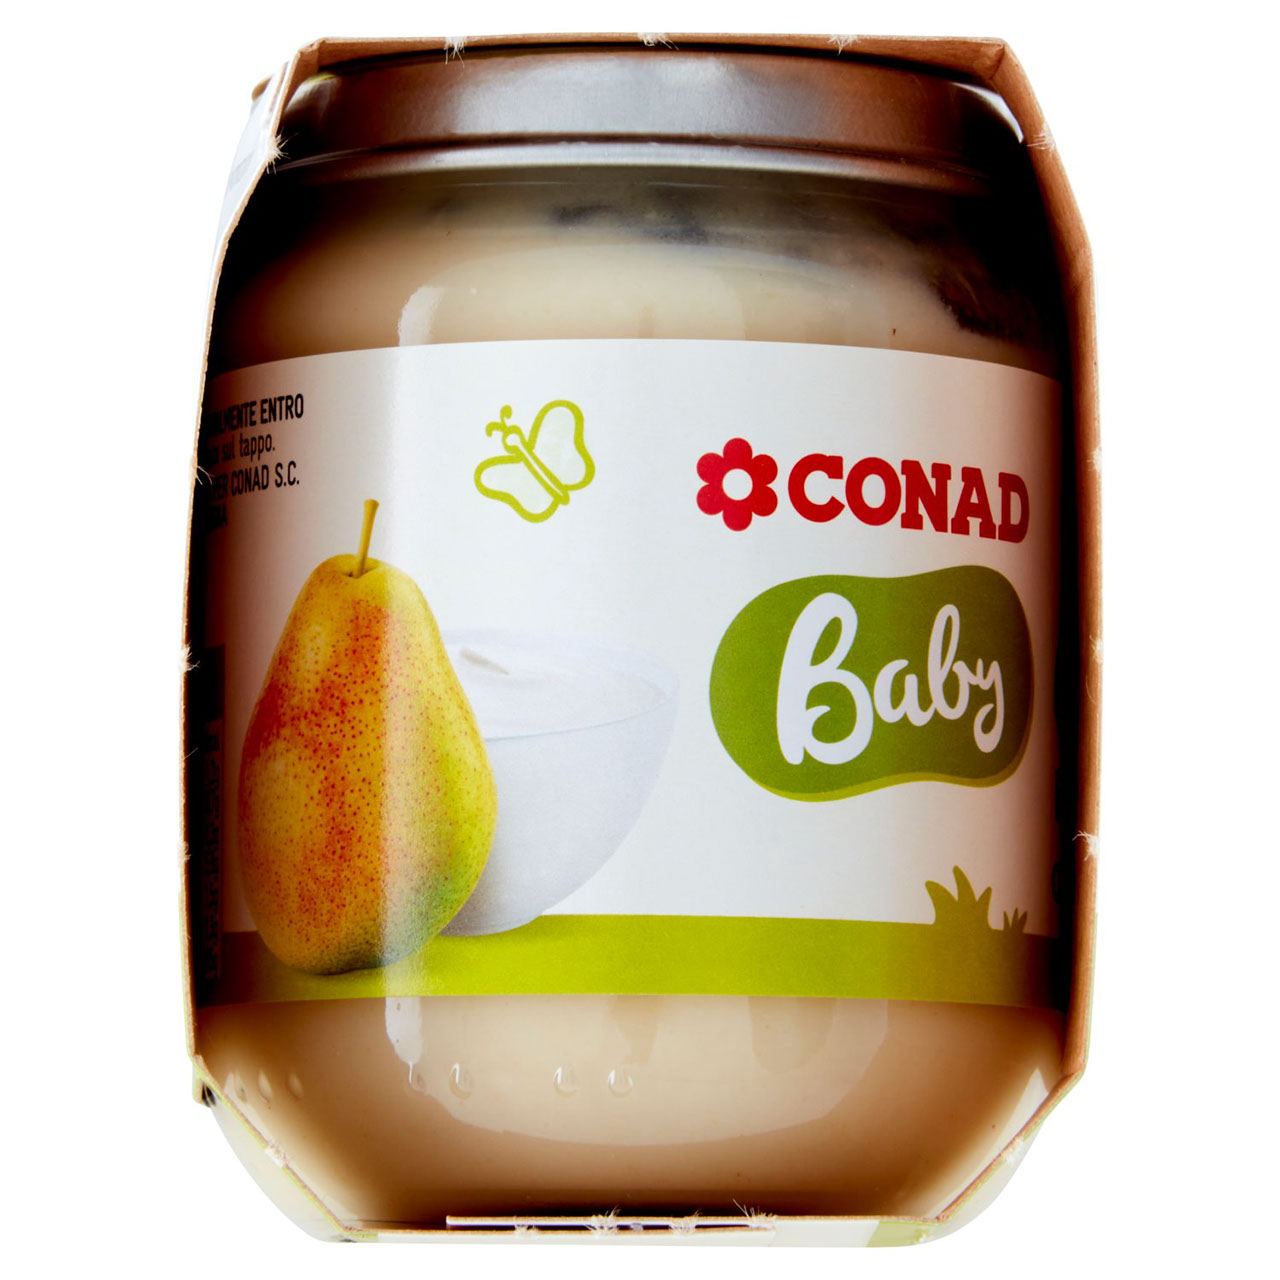 Baby Merenda Pera e Yogurt Biologico Conad